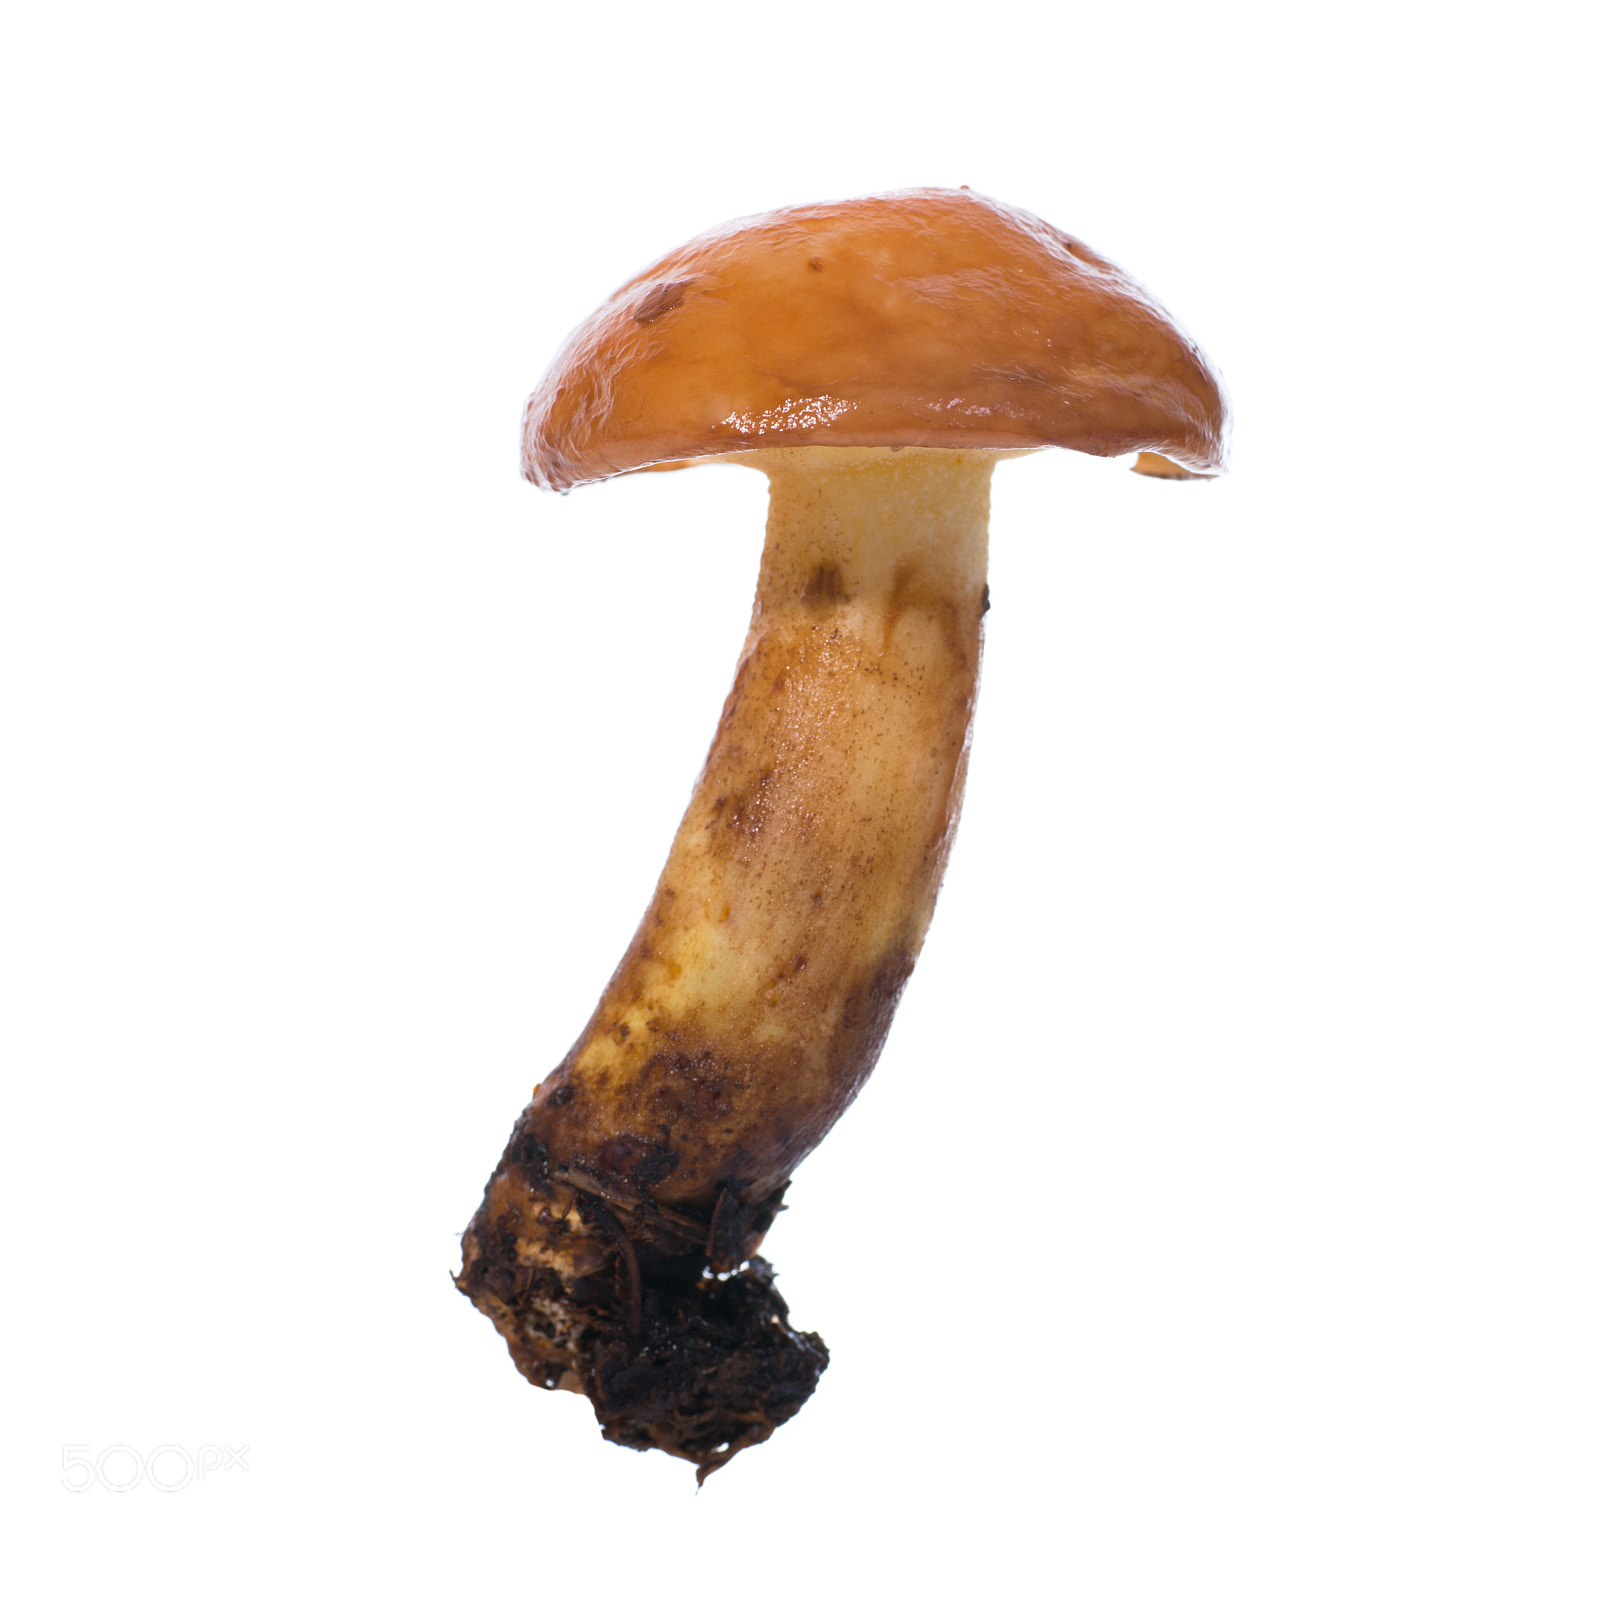 Nikon D800 sample photo. Edible mushroom suillus photography